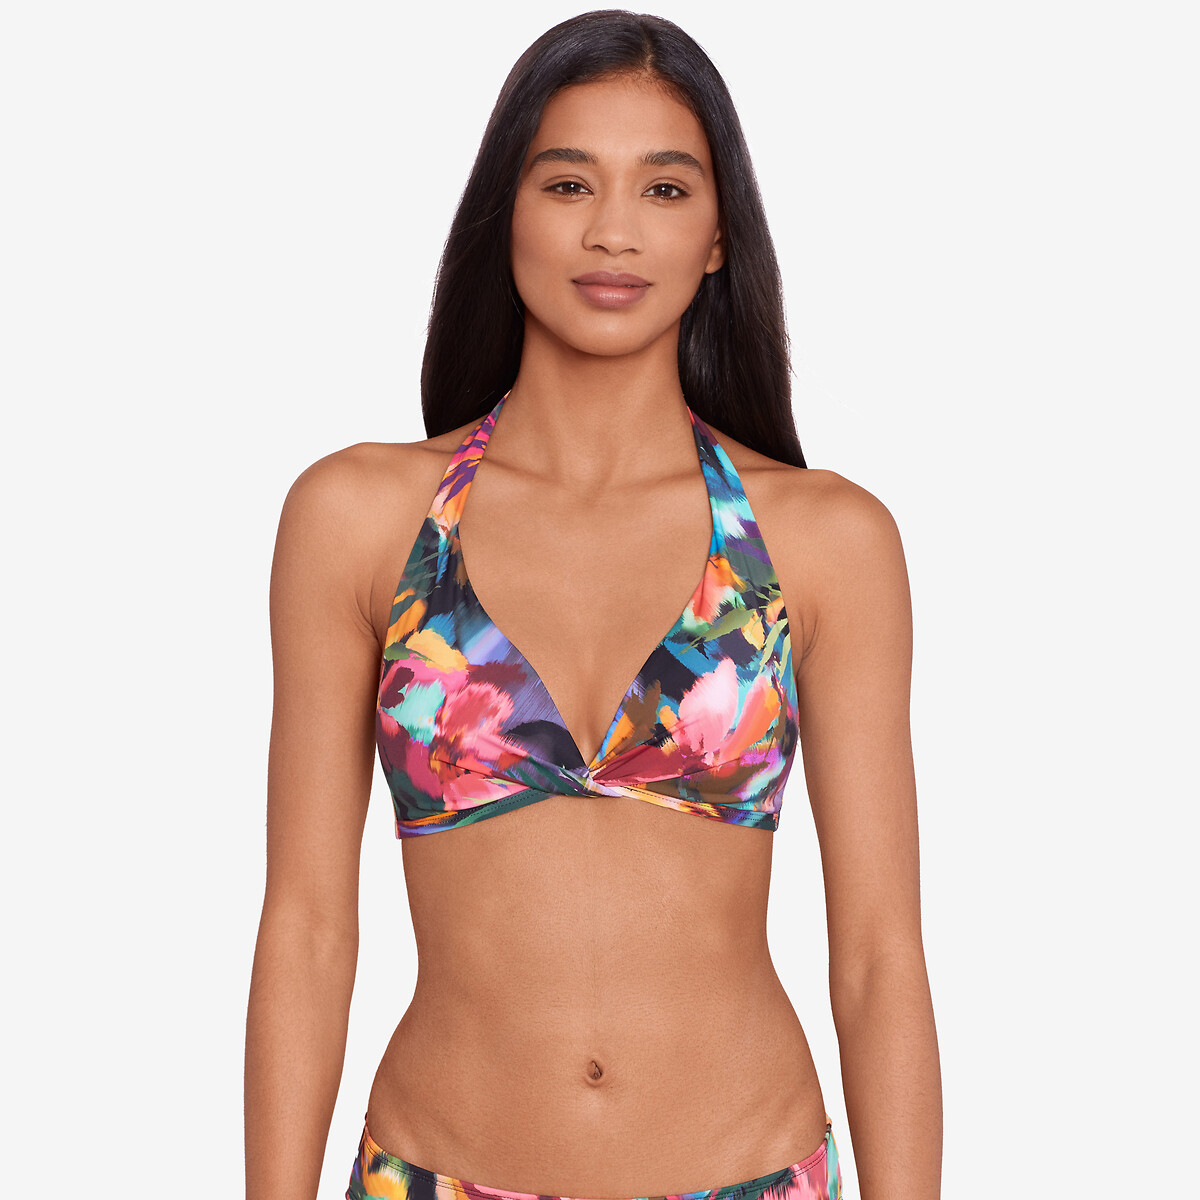 Jungle Paradise Bikini Top in Floral Print